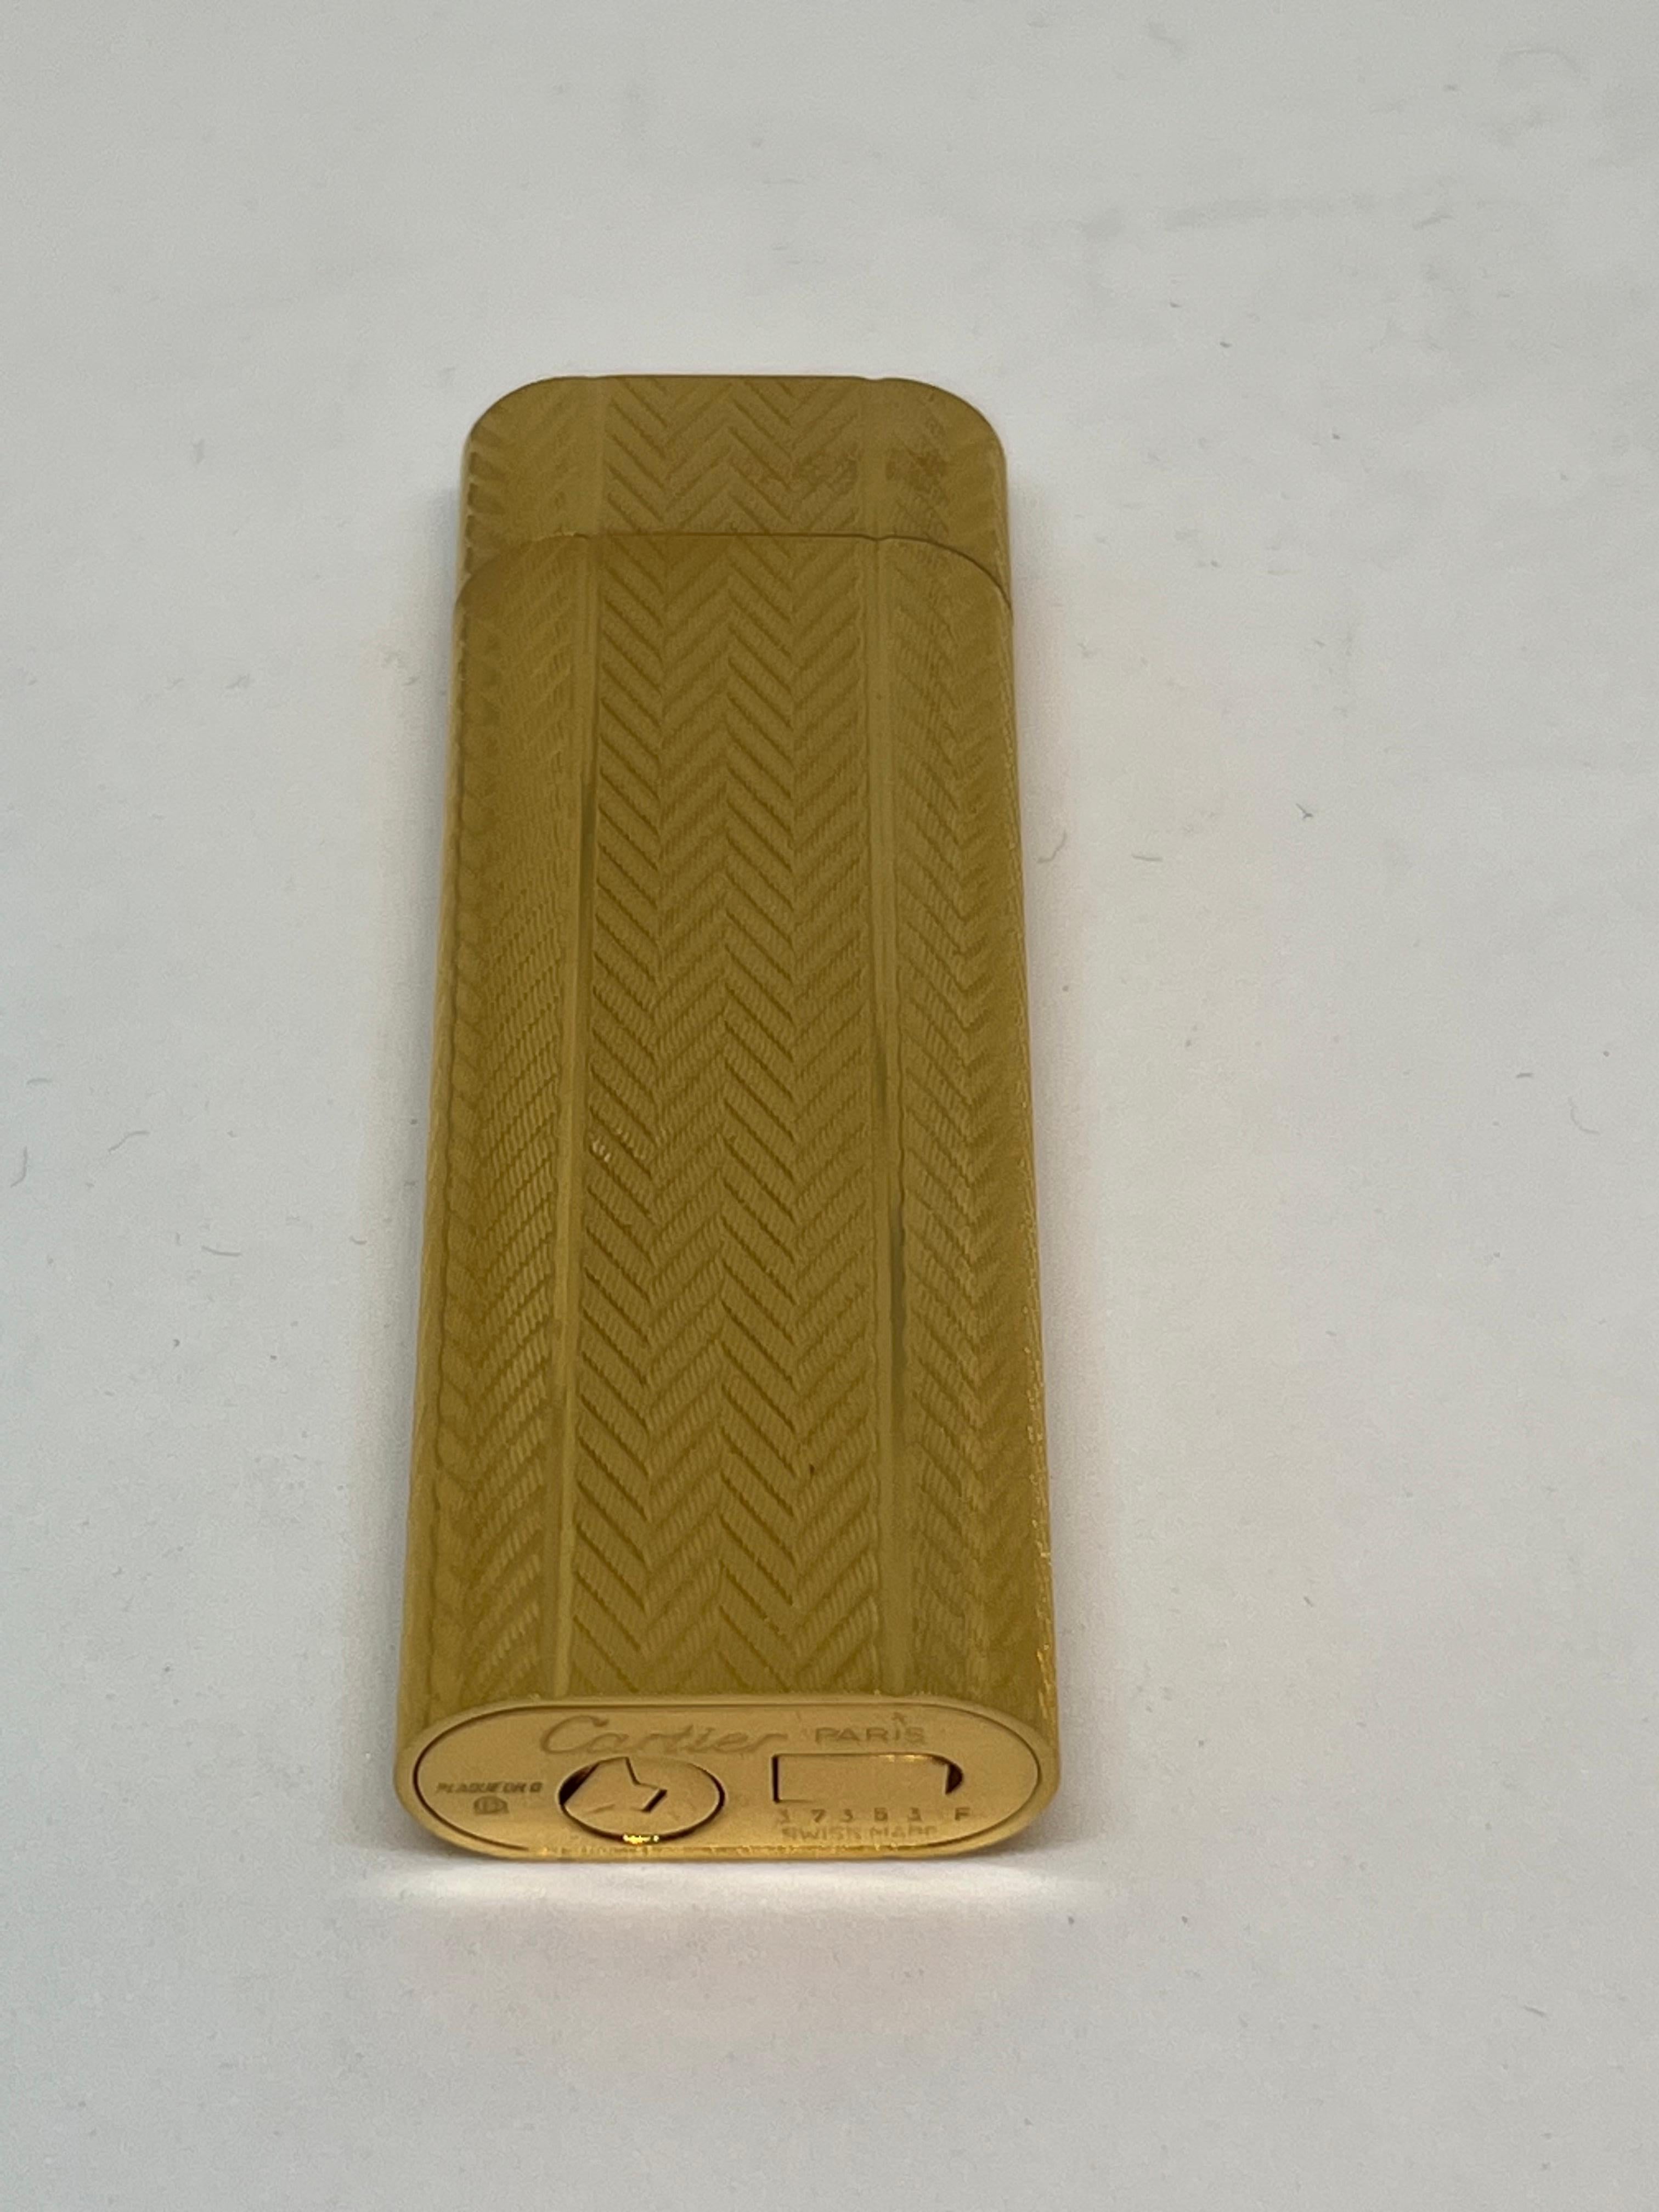 Les Must de Cartier Paris 18k Gold Plated Lighter 11